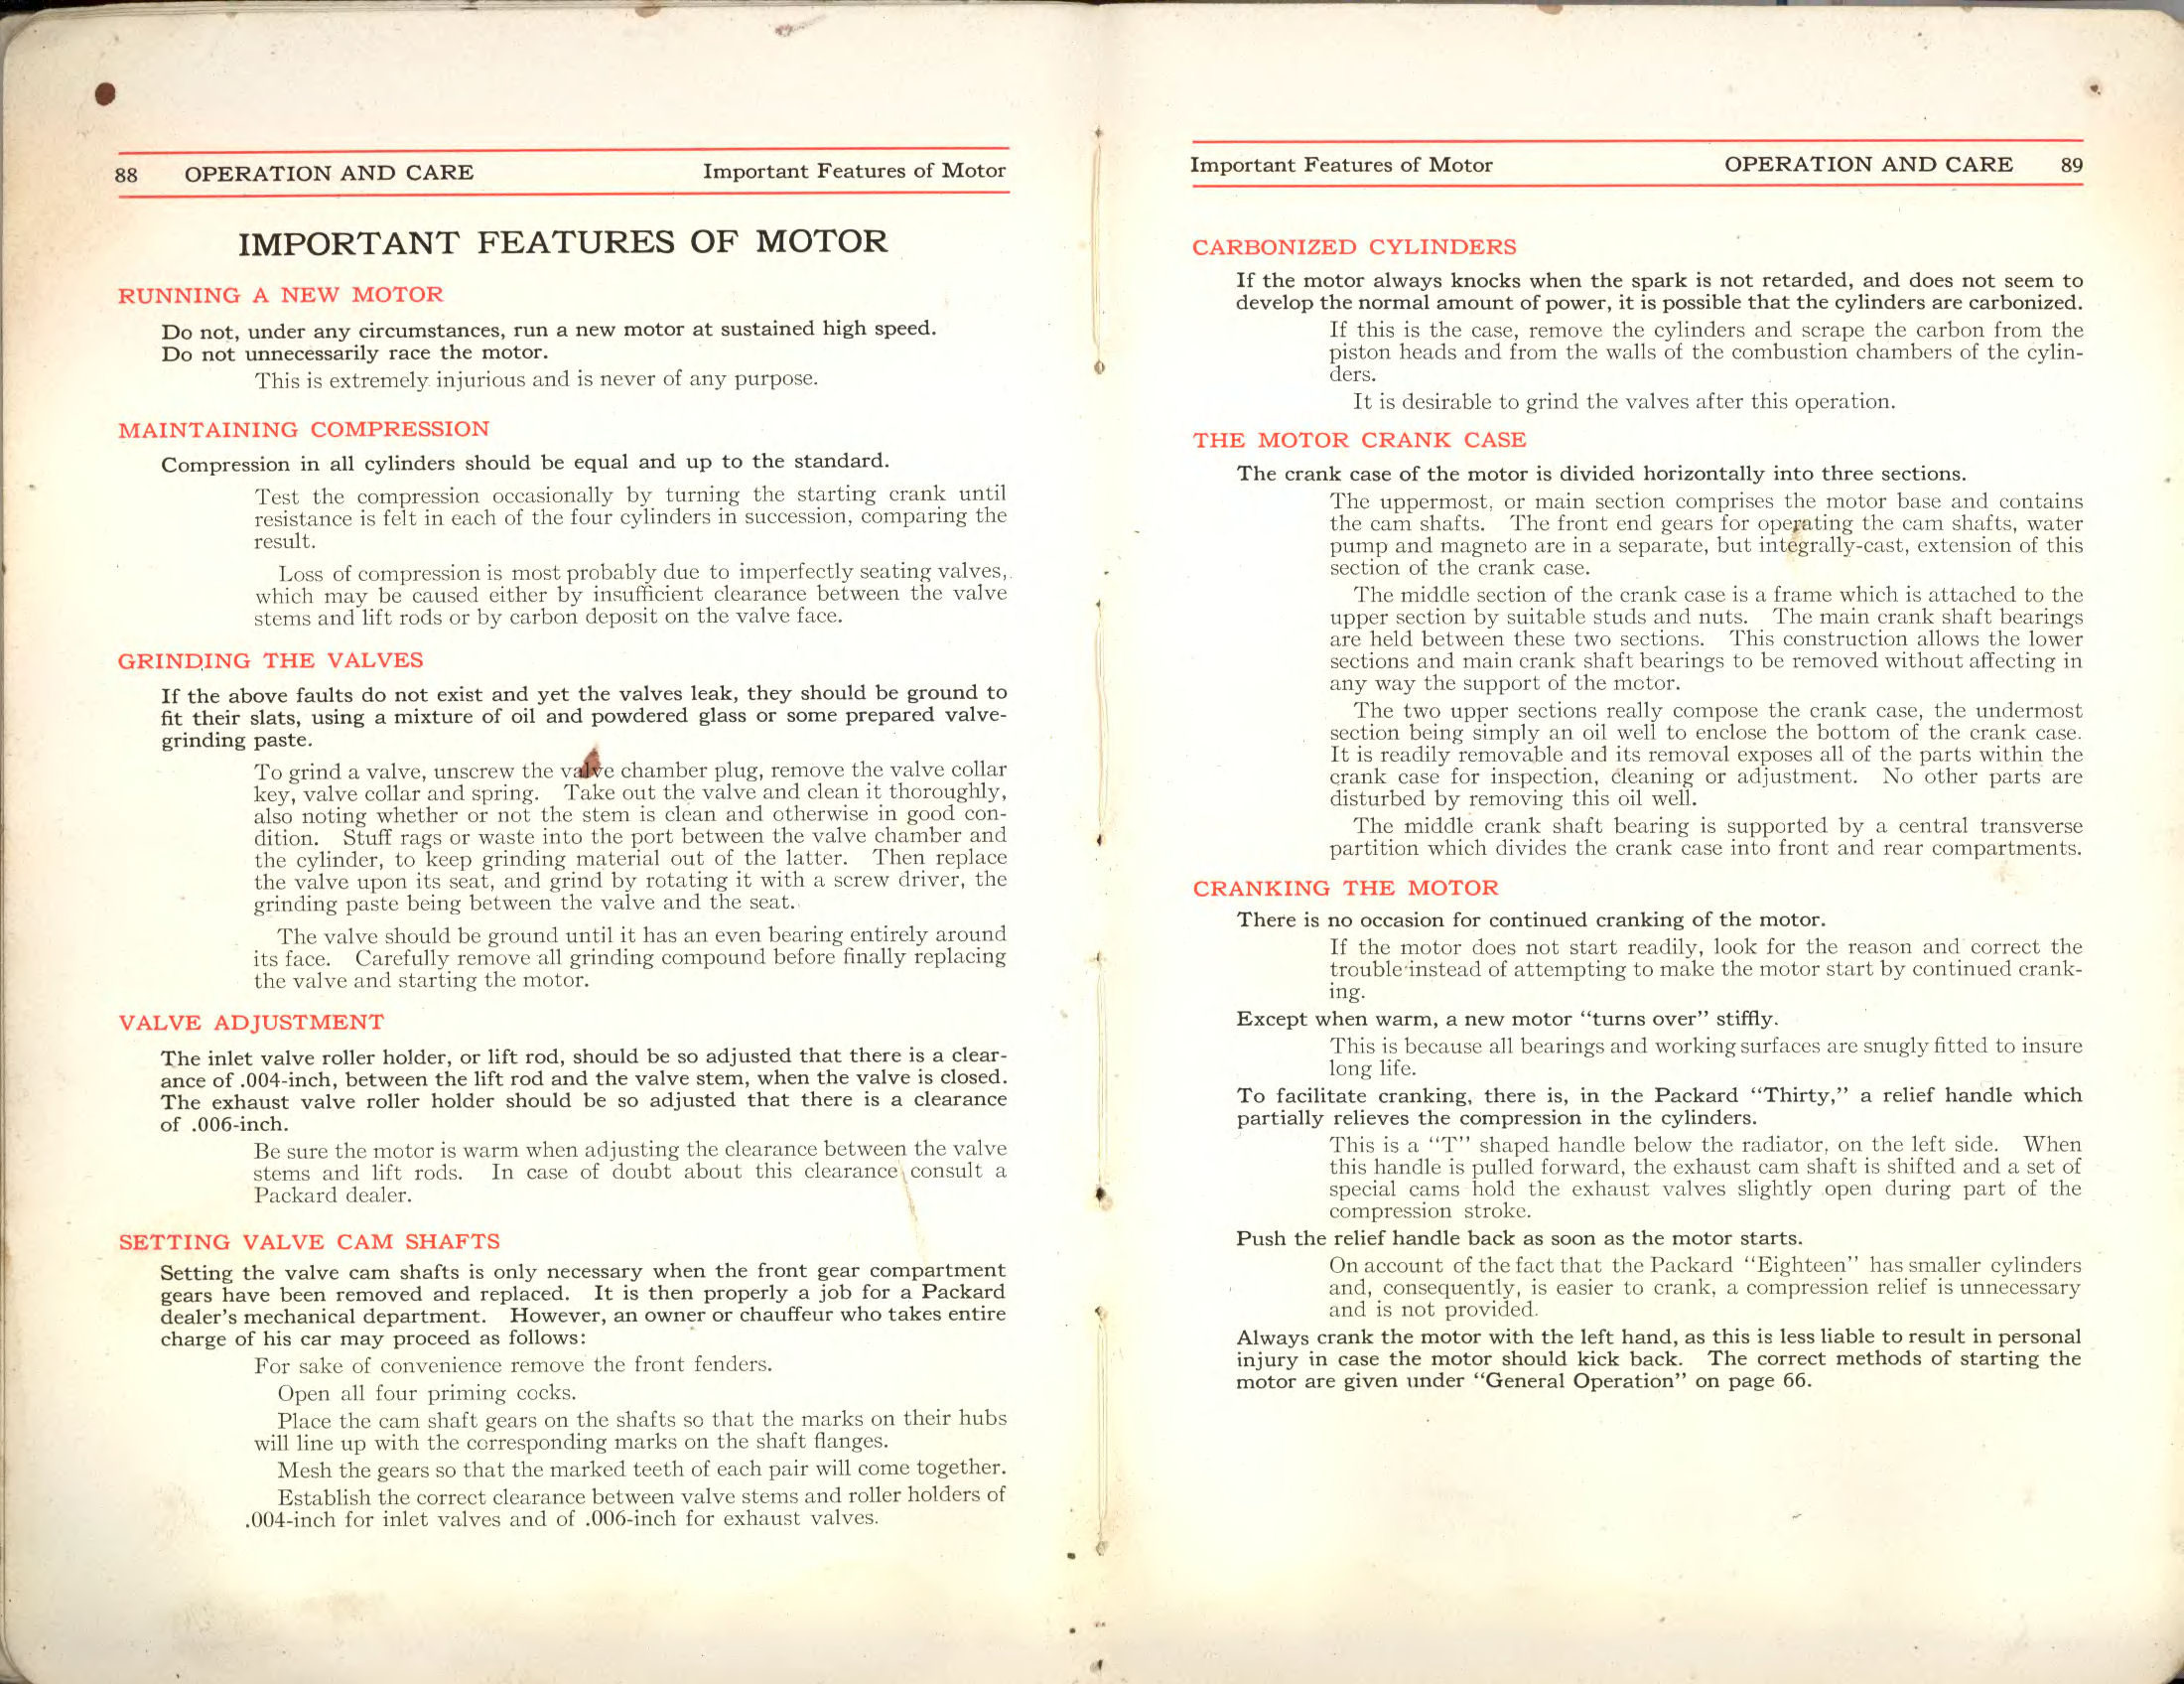 1911 Packard Manual-088-089